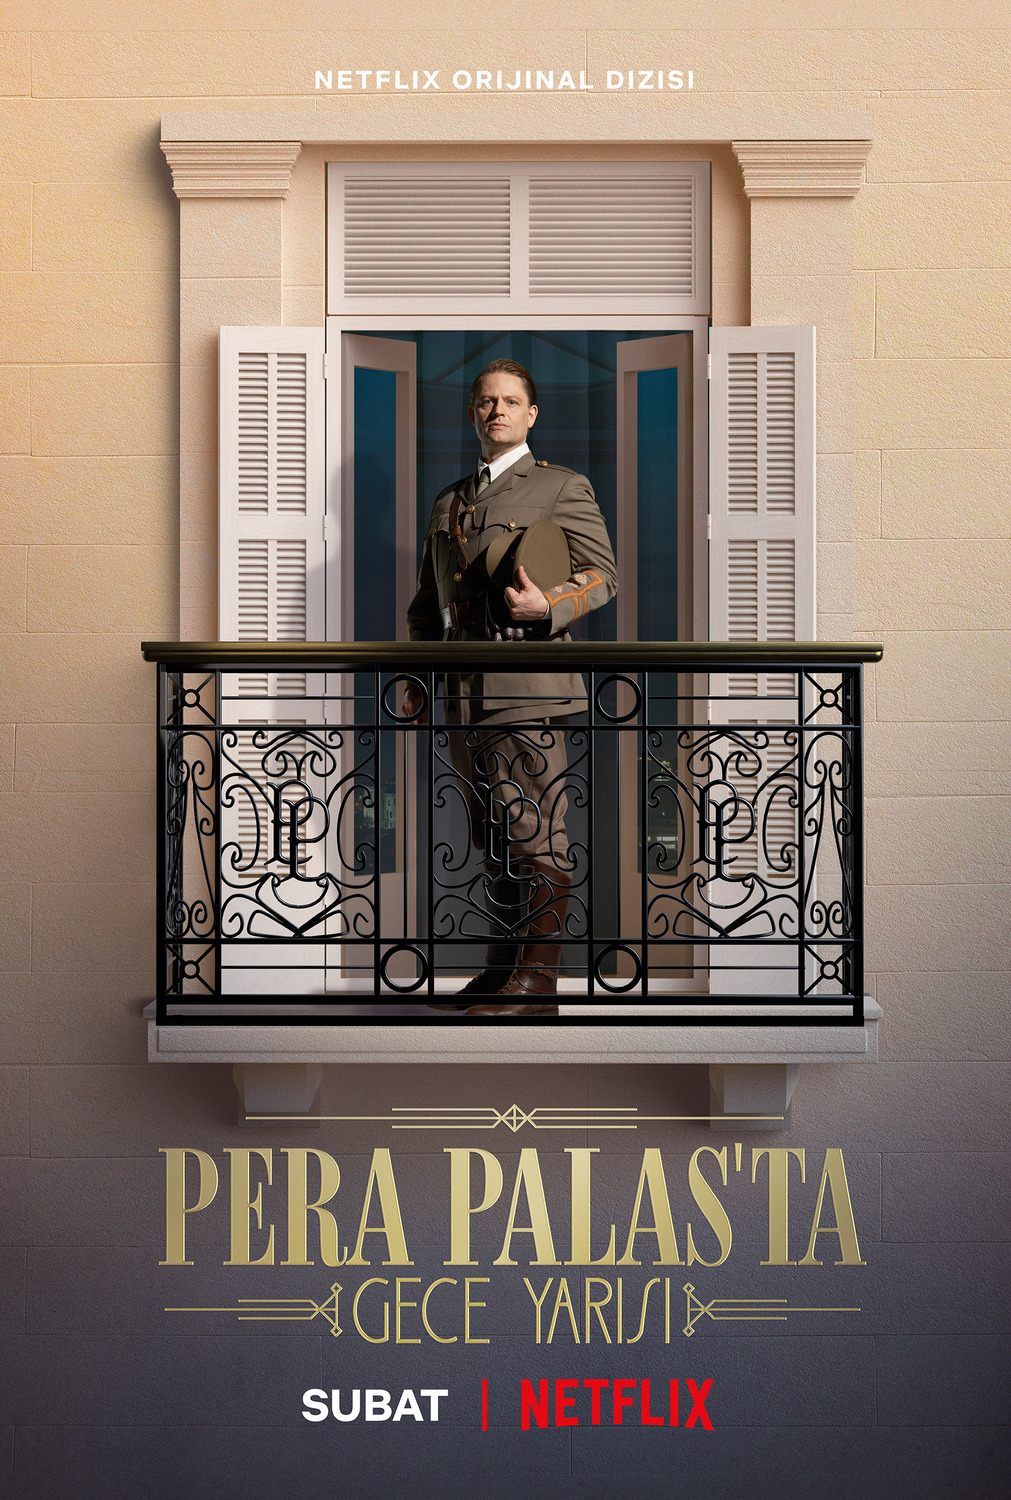 Extra Large TV Poster Image for Pera Palas'ta Gece Yarisi (#6 of 10)